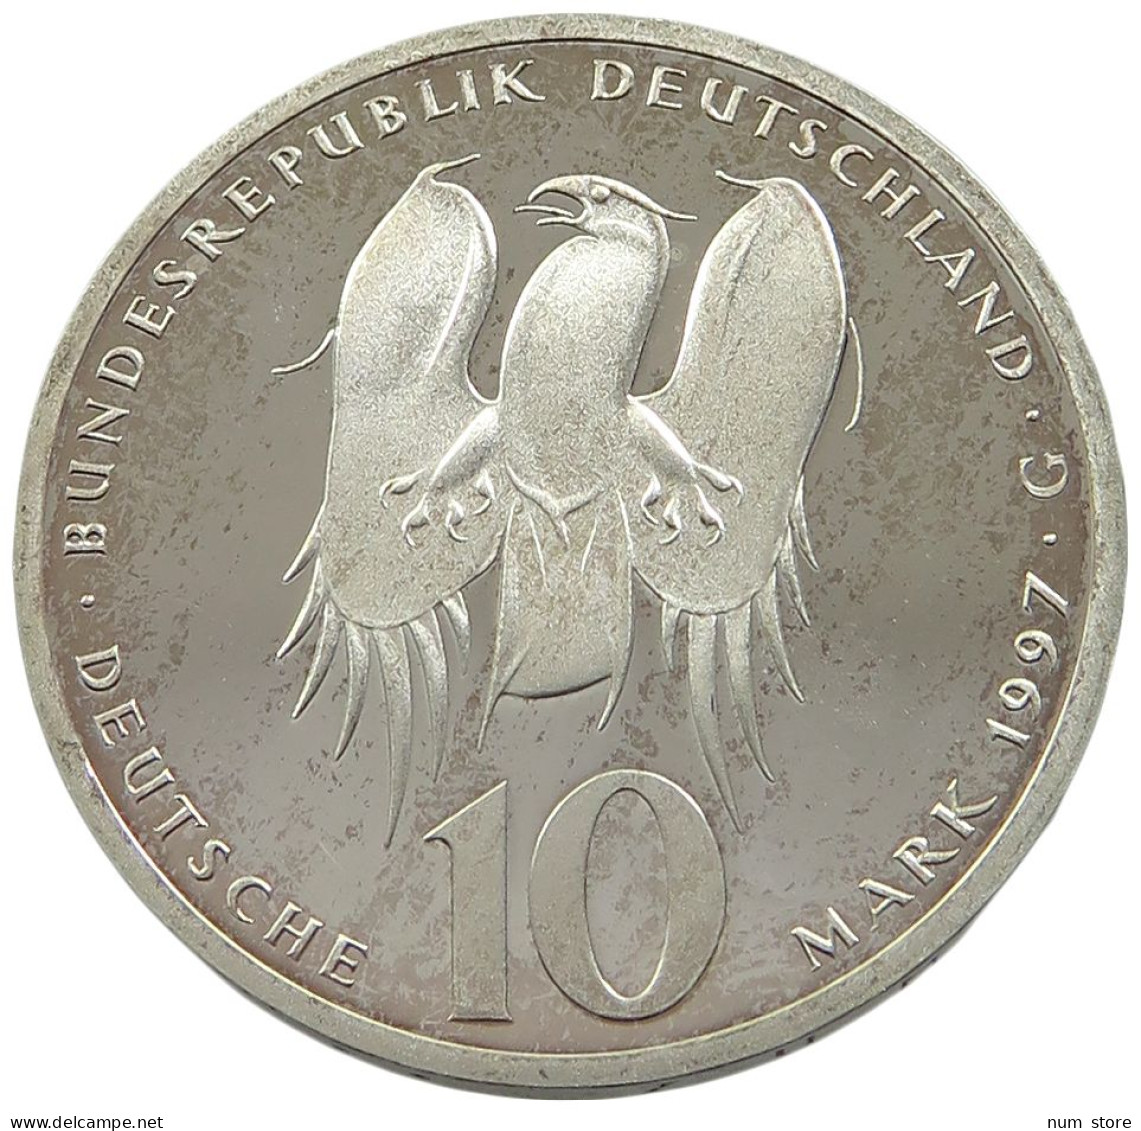 GERMANY BRD 10 MARK 1997 G PROOF #sm14 0967 - 10 Mark